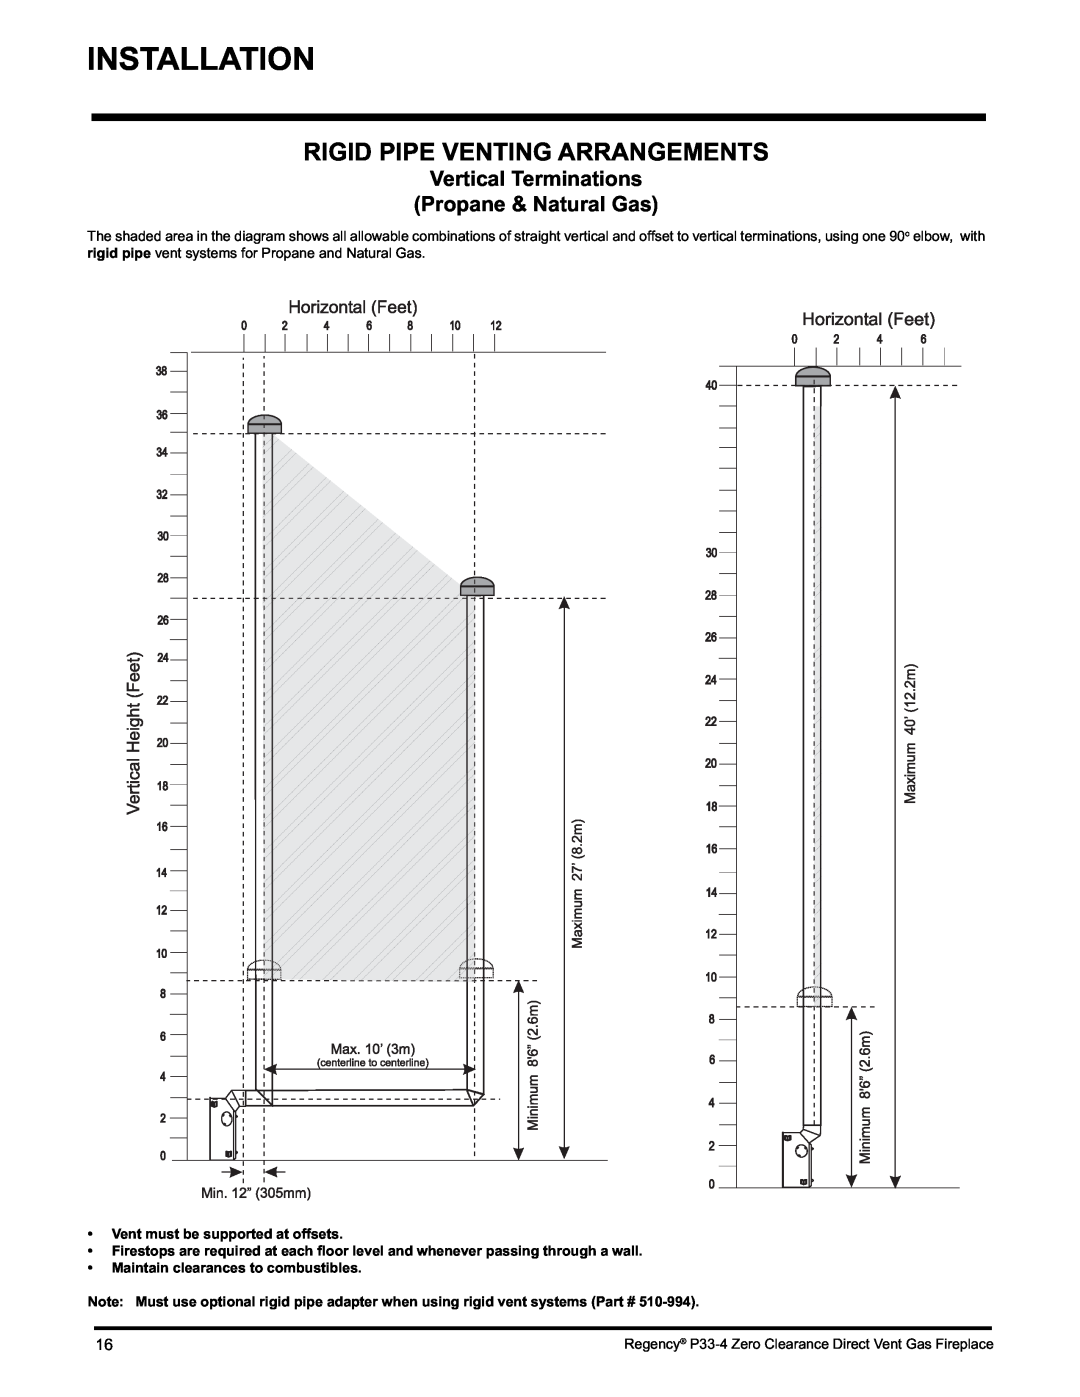 Regency P33-NG4 installation manual Rigid Pipe Venting Arrangements, Vertical Terminations Propane & Natural Gas 